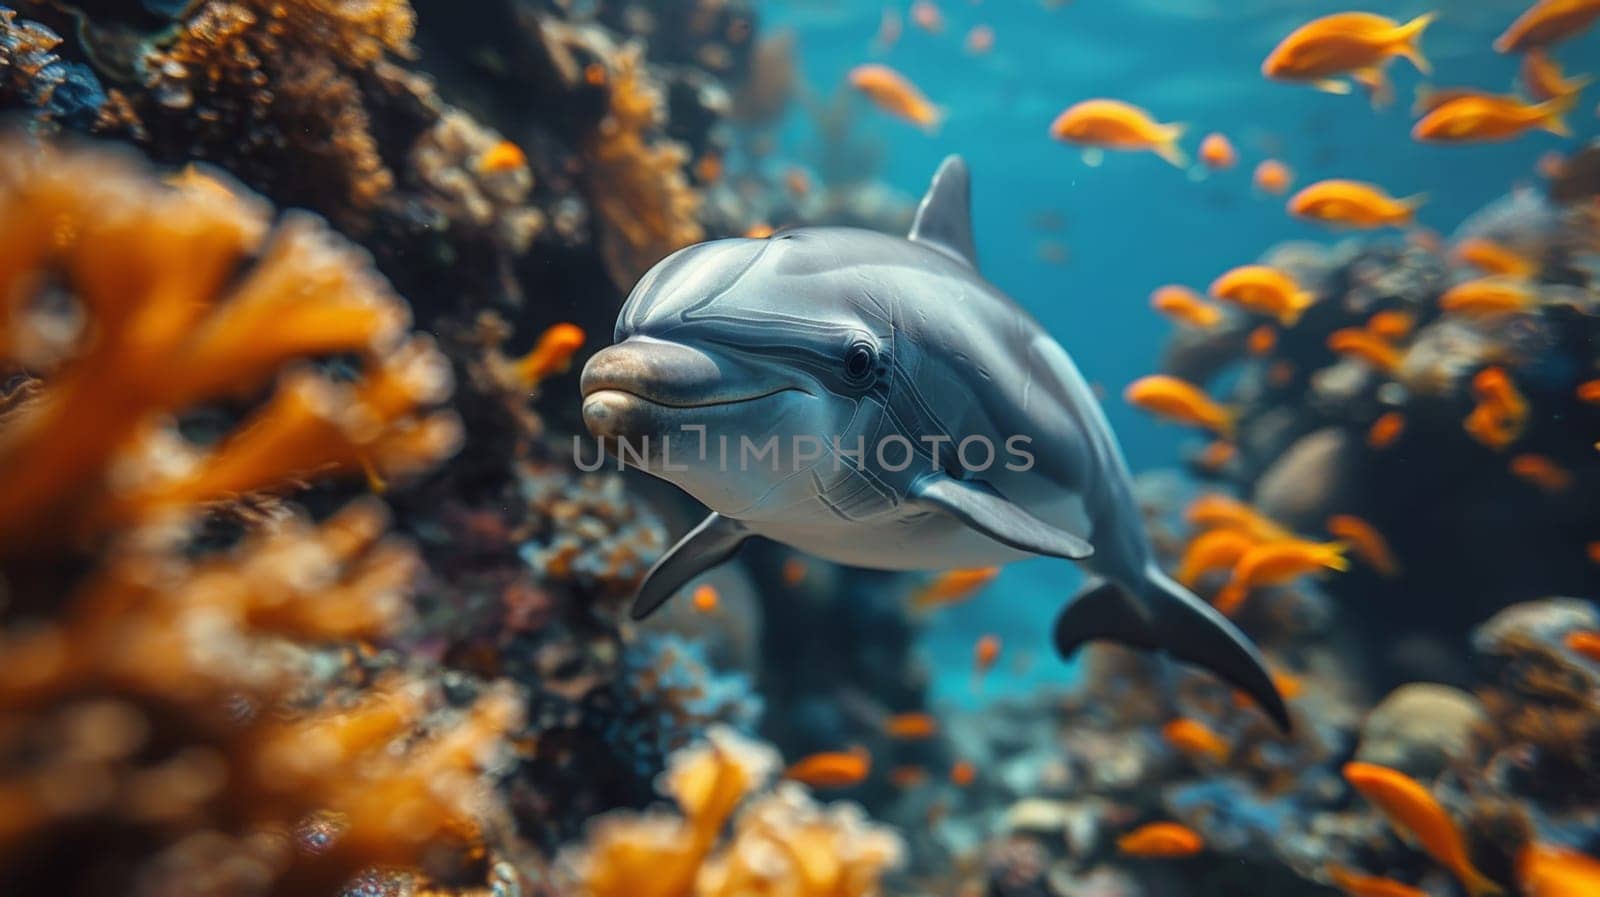 The underwater world. Animals of the underwater marine world. The ecosystem. World Ocean Day by Lobachad